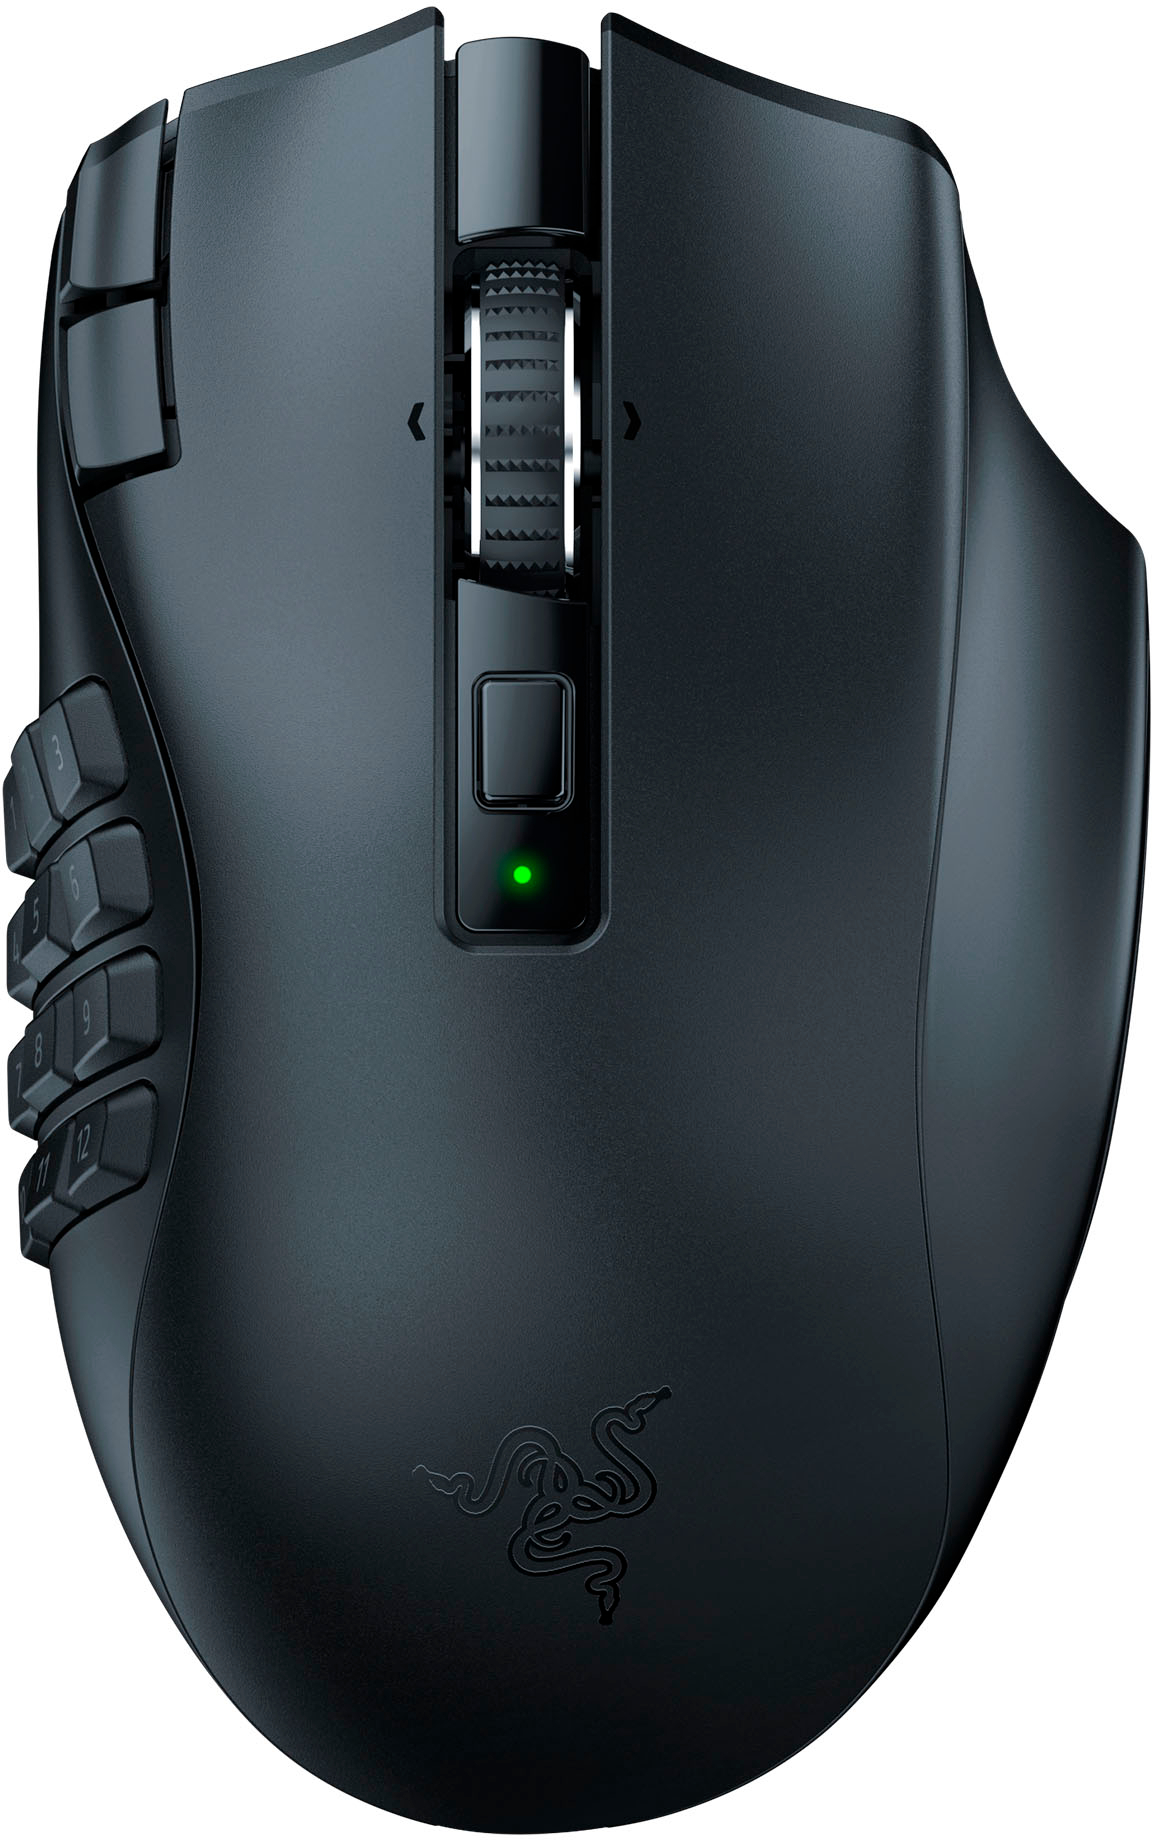 Razer Naga V2 Pro MMO Wireless Gaming Mouse Review